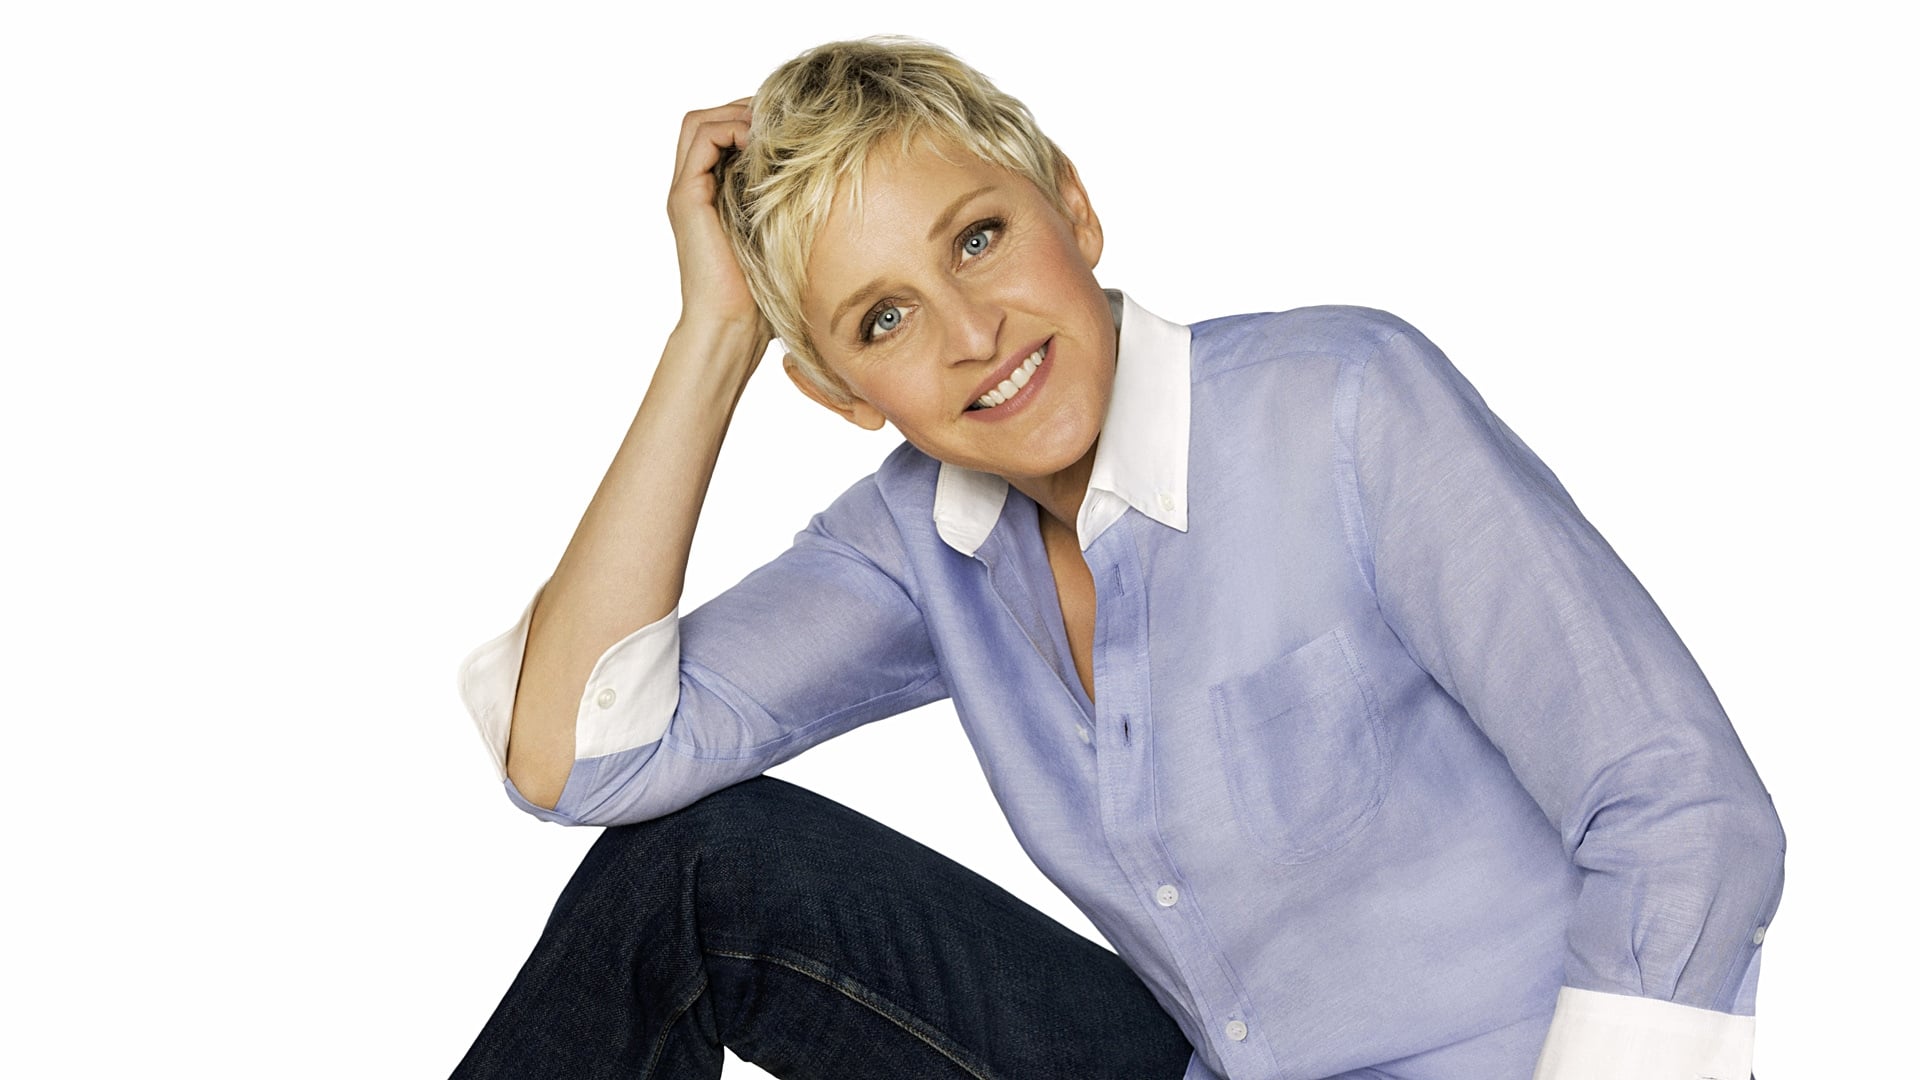 The Ellen DeGeneres Show - Season 19 Episode 59 : Day 9 of 12 Days of Giveaways with Blake Shelton